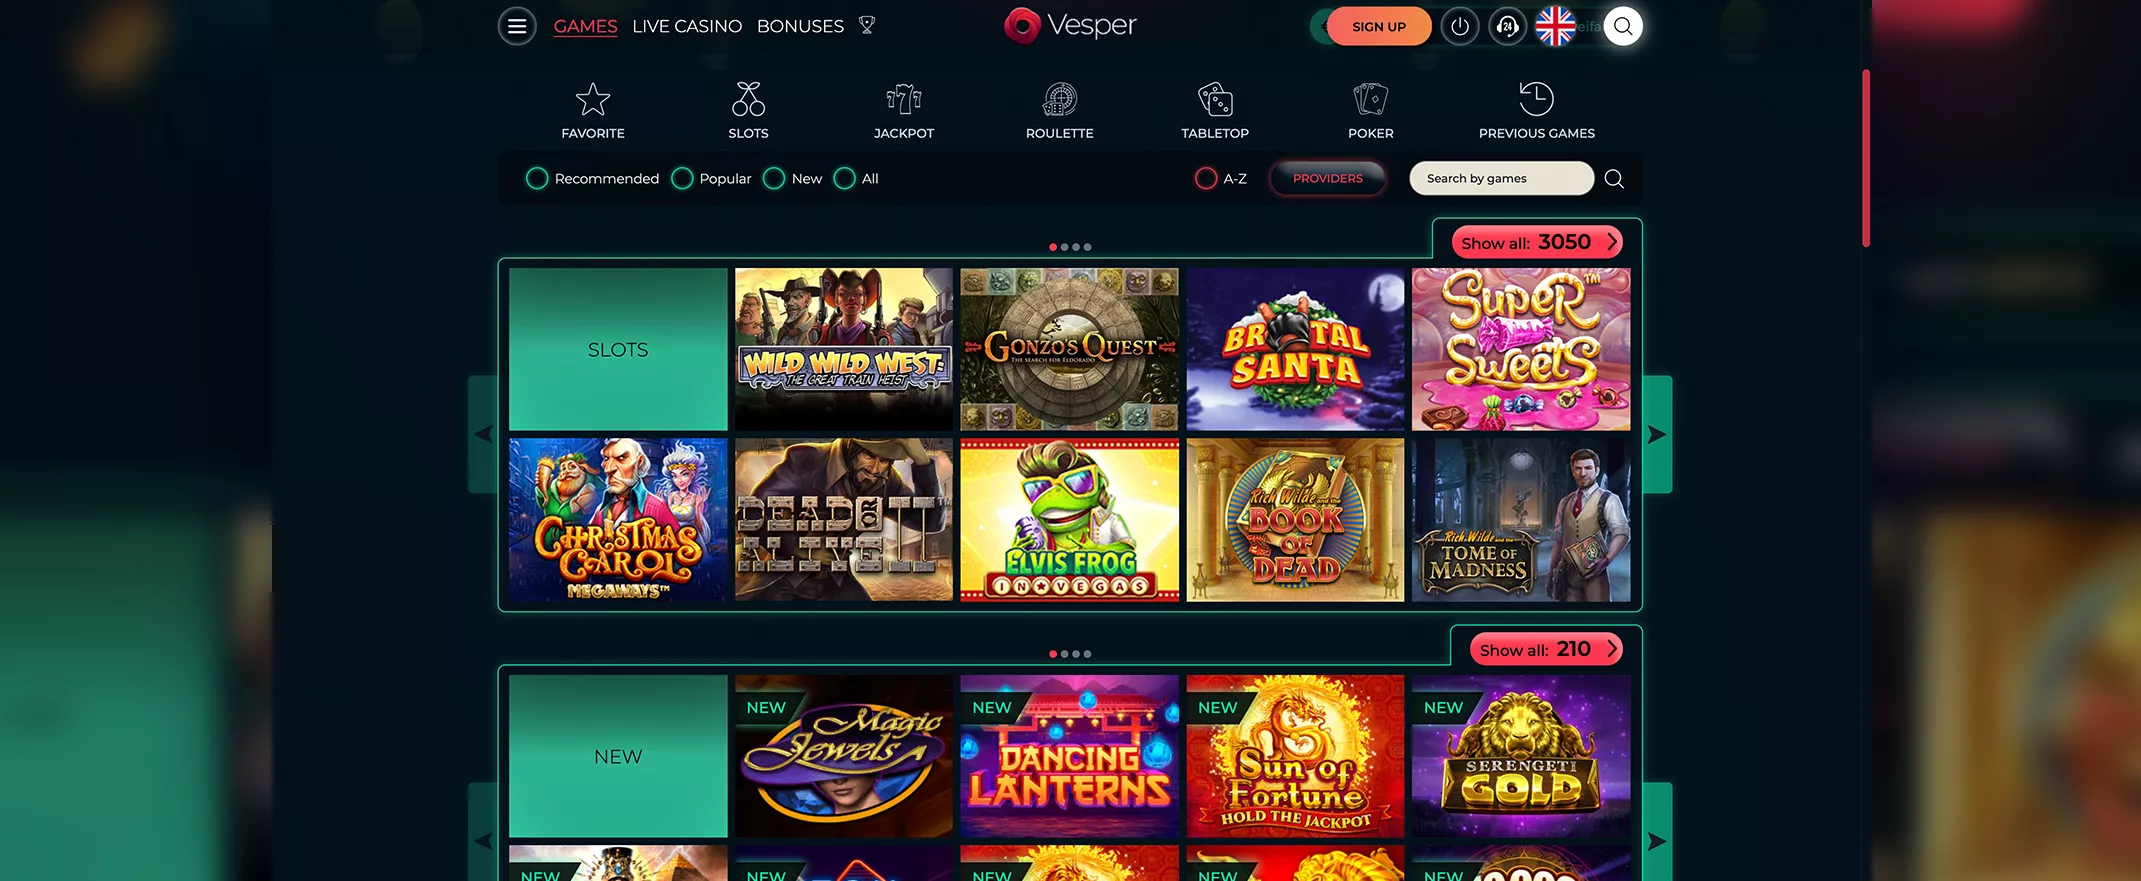 Vesper Casino screenshot of the games